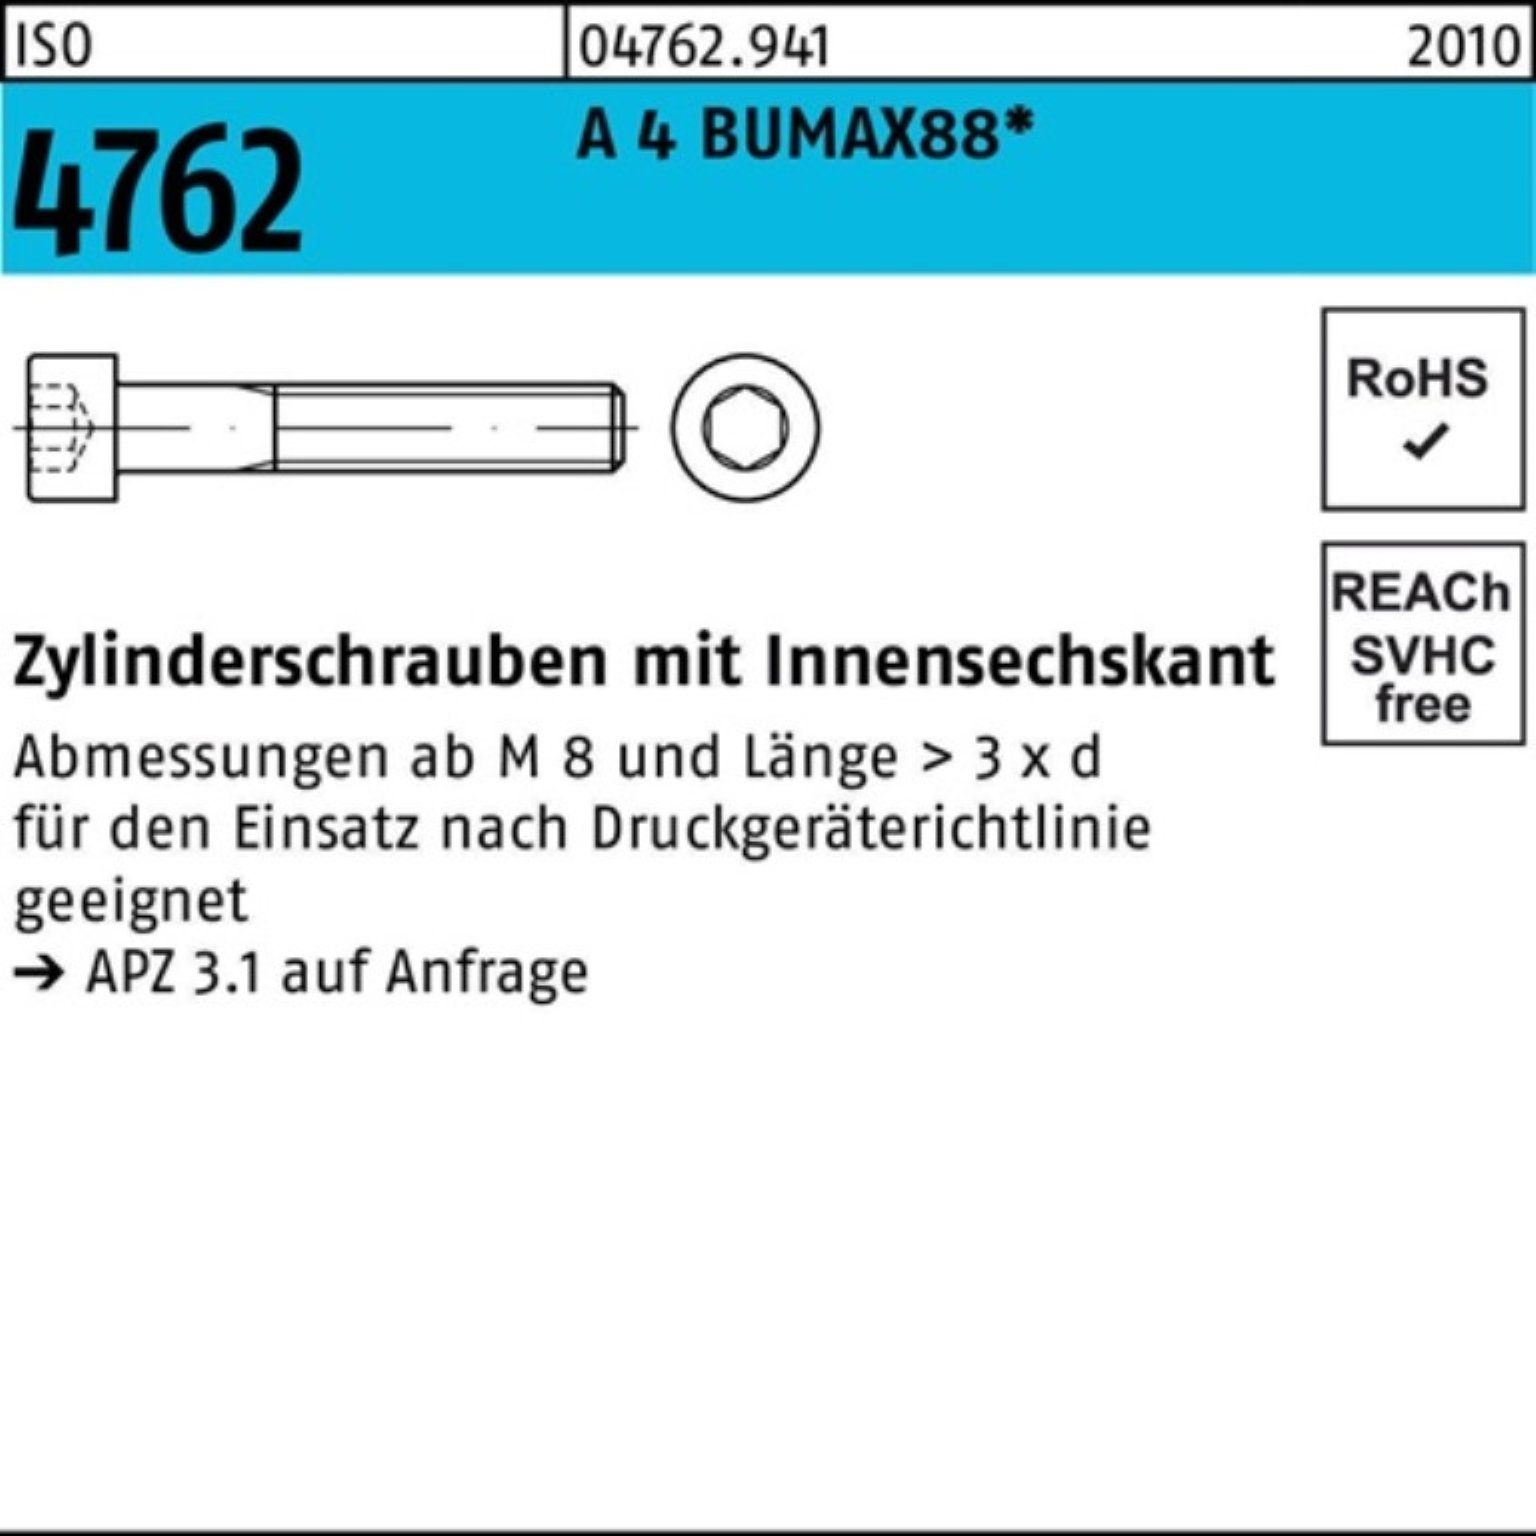 Bufab Zylinderschraube 500er Pack Zylinderschraube M3x BUMAX88 A 4 20 500 4762 ISO Innen-6kt